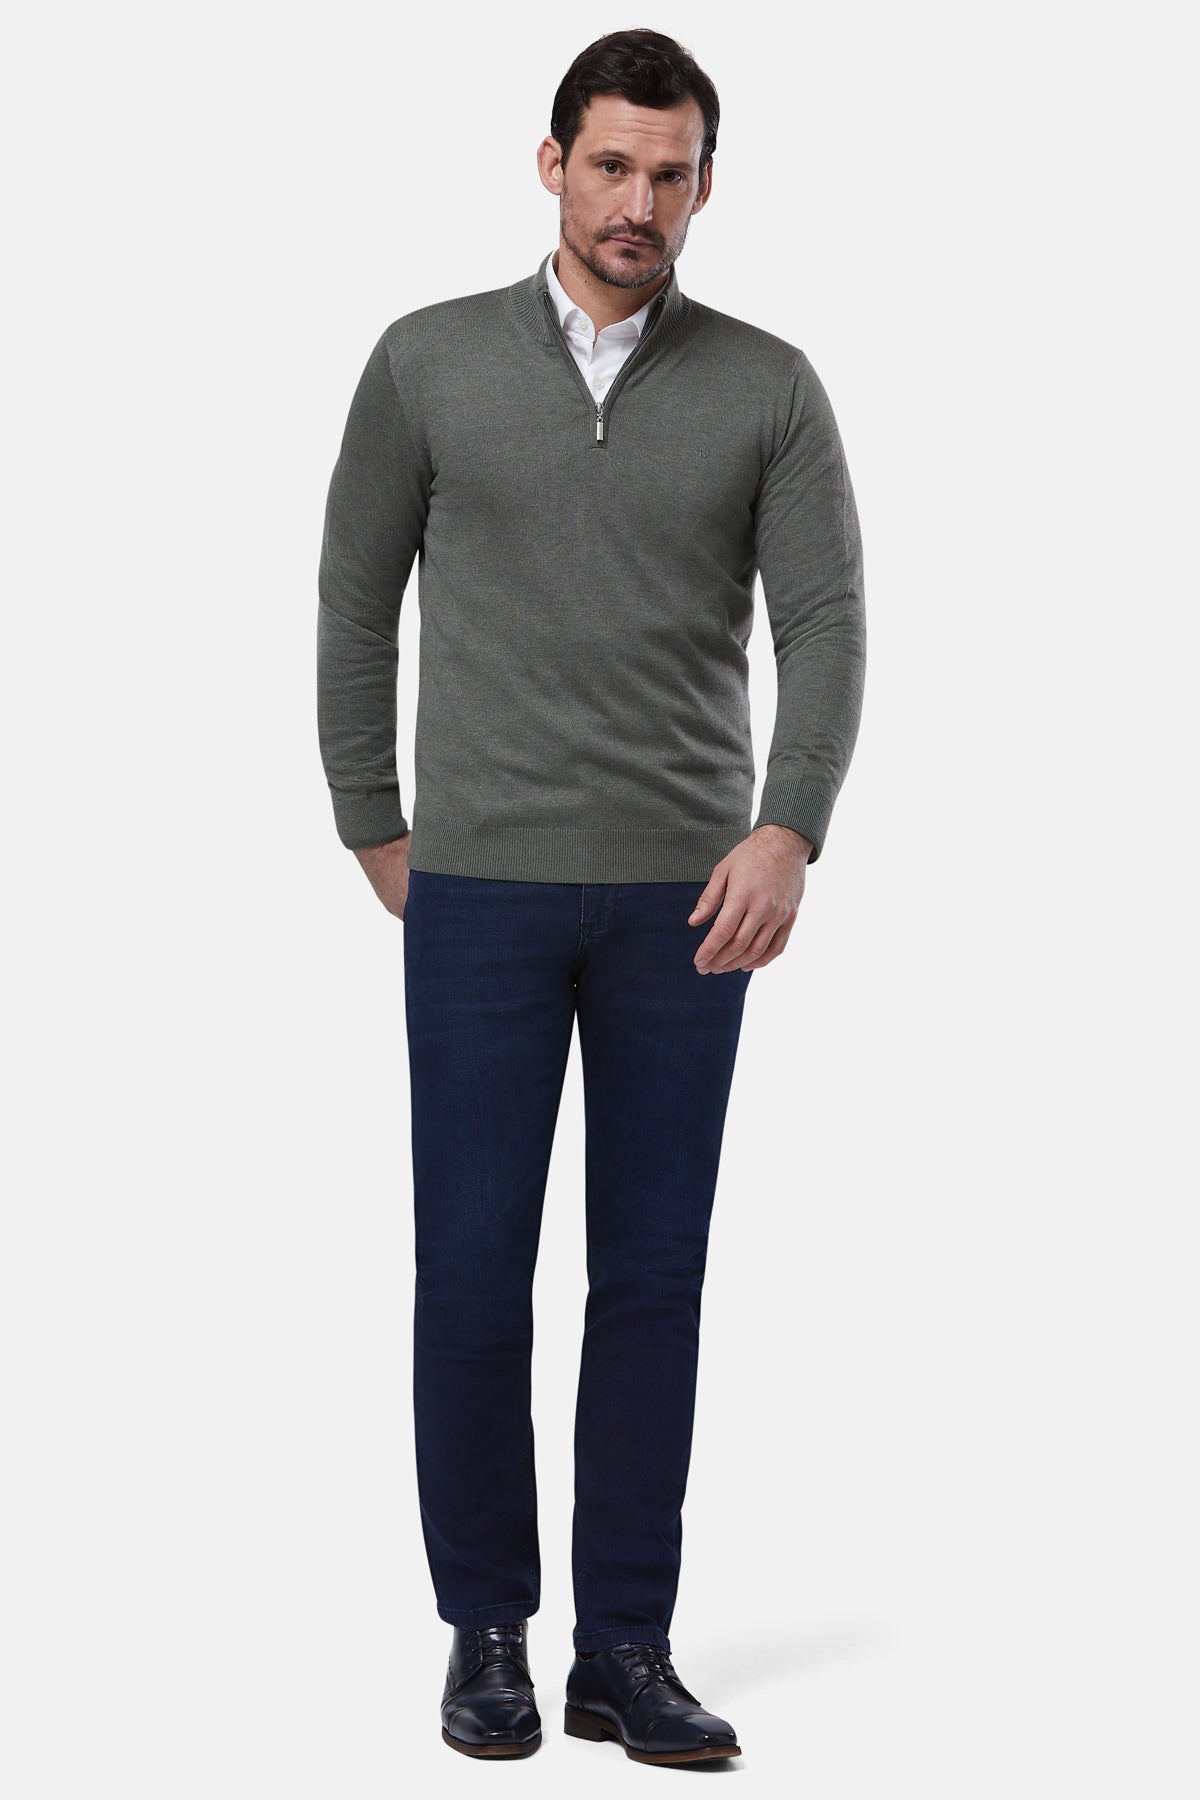 Quarter Zip Sage Sweater By Benetti Menswear 